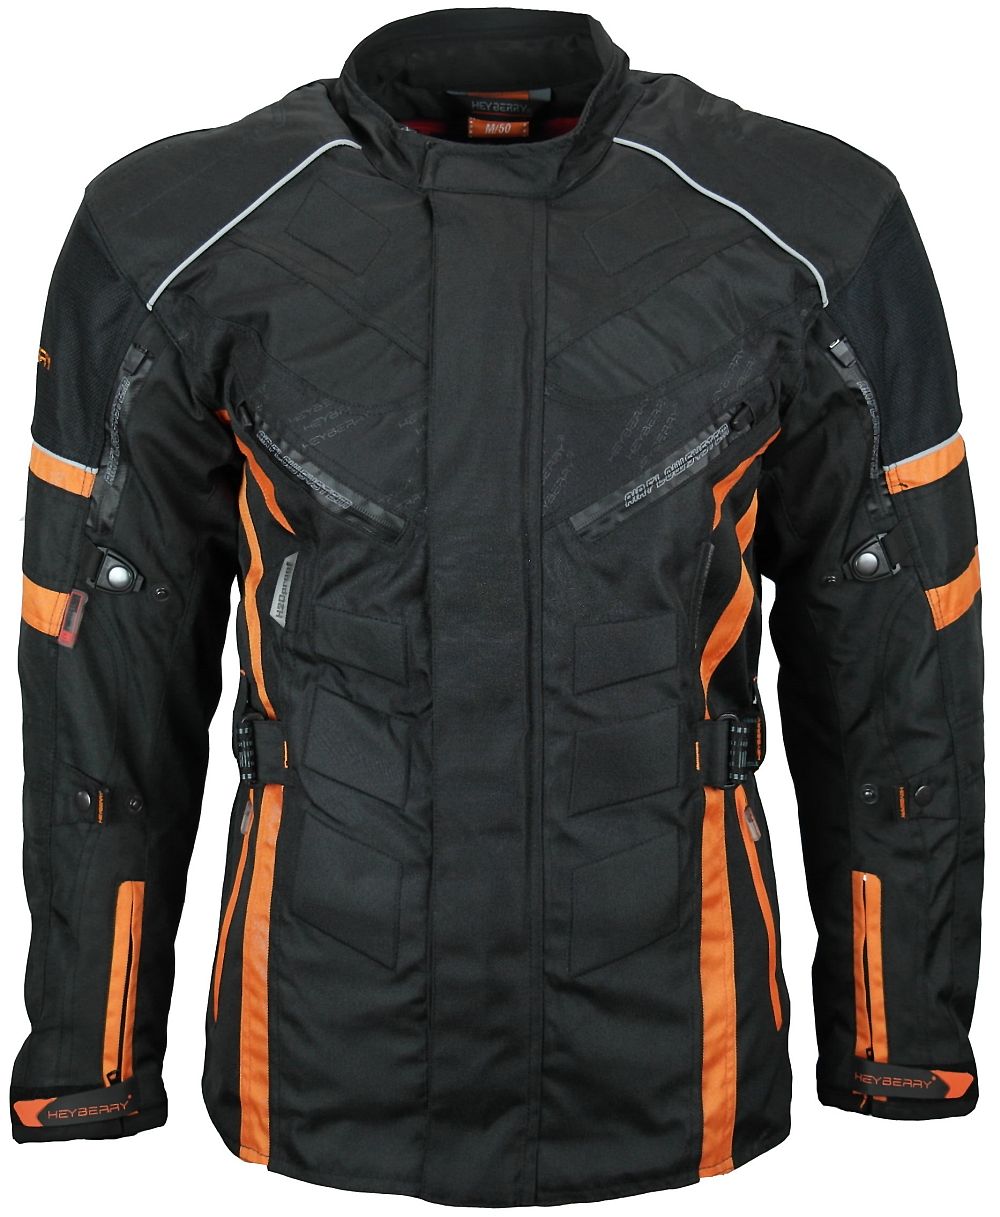 L HEYBERRY Herren Touren Motorradjacke Textil schwarz orange Gr 